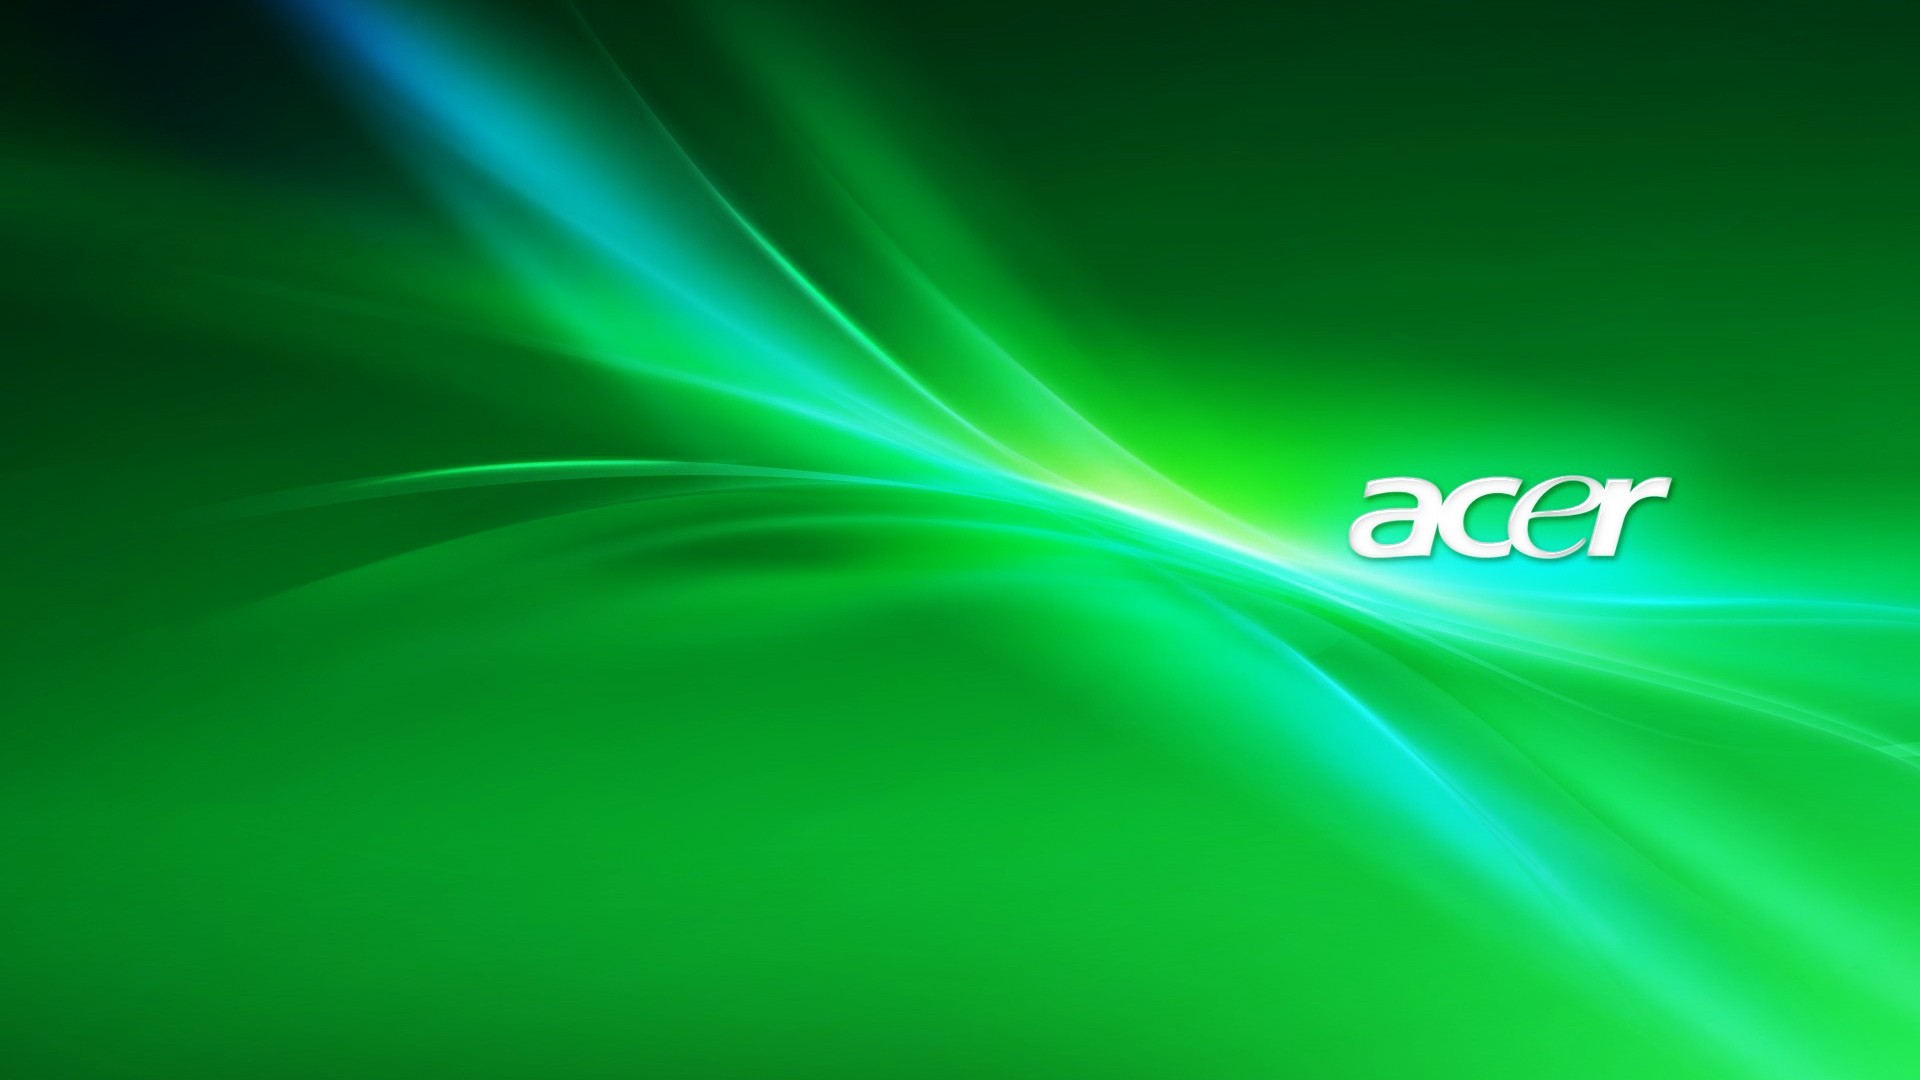 46 Acer Wallpaper 1080p Hd 1920x1080 On Wallpapersafari